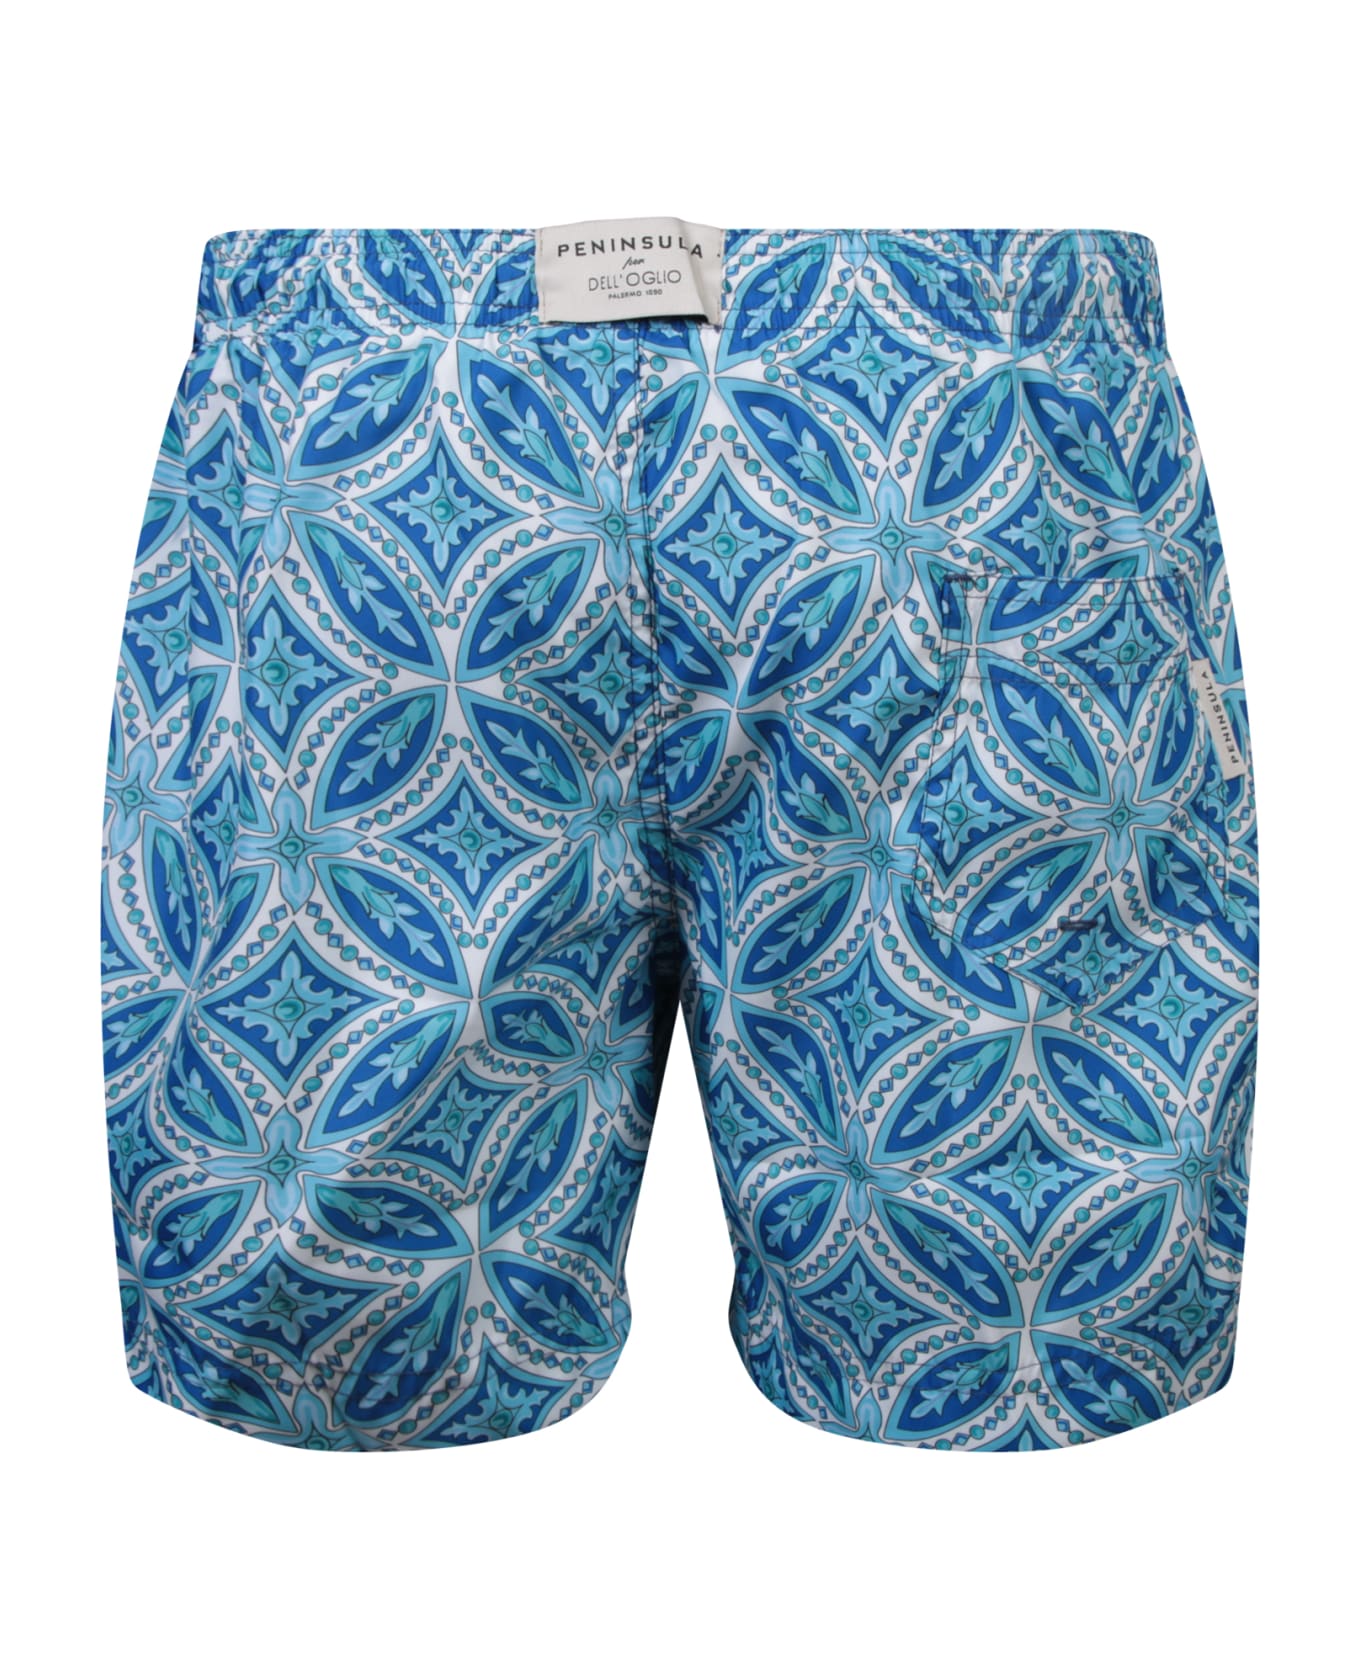 Peninsula Swimwear Patterned Swim Shorts In Sky Blue/blue/white - White